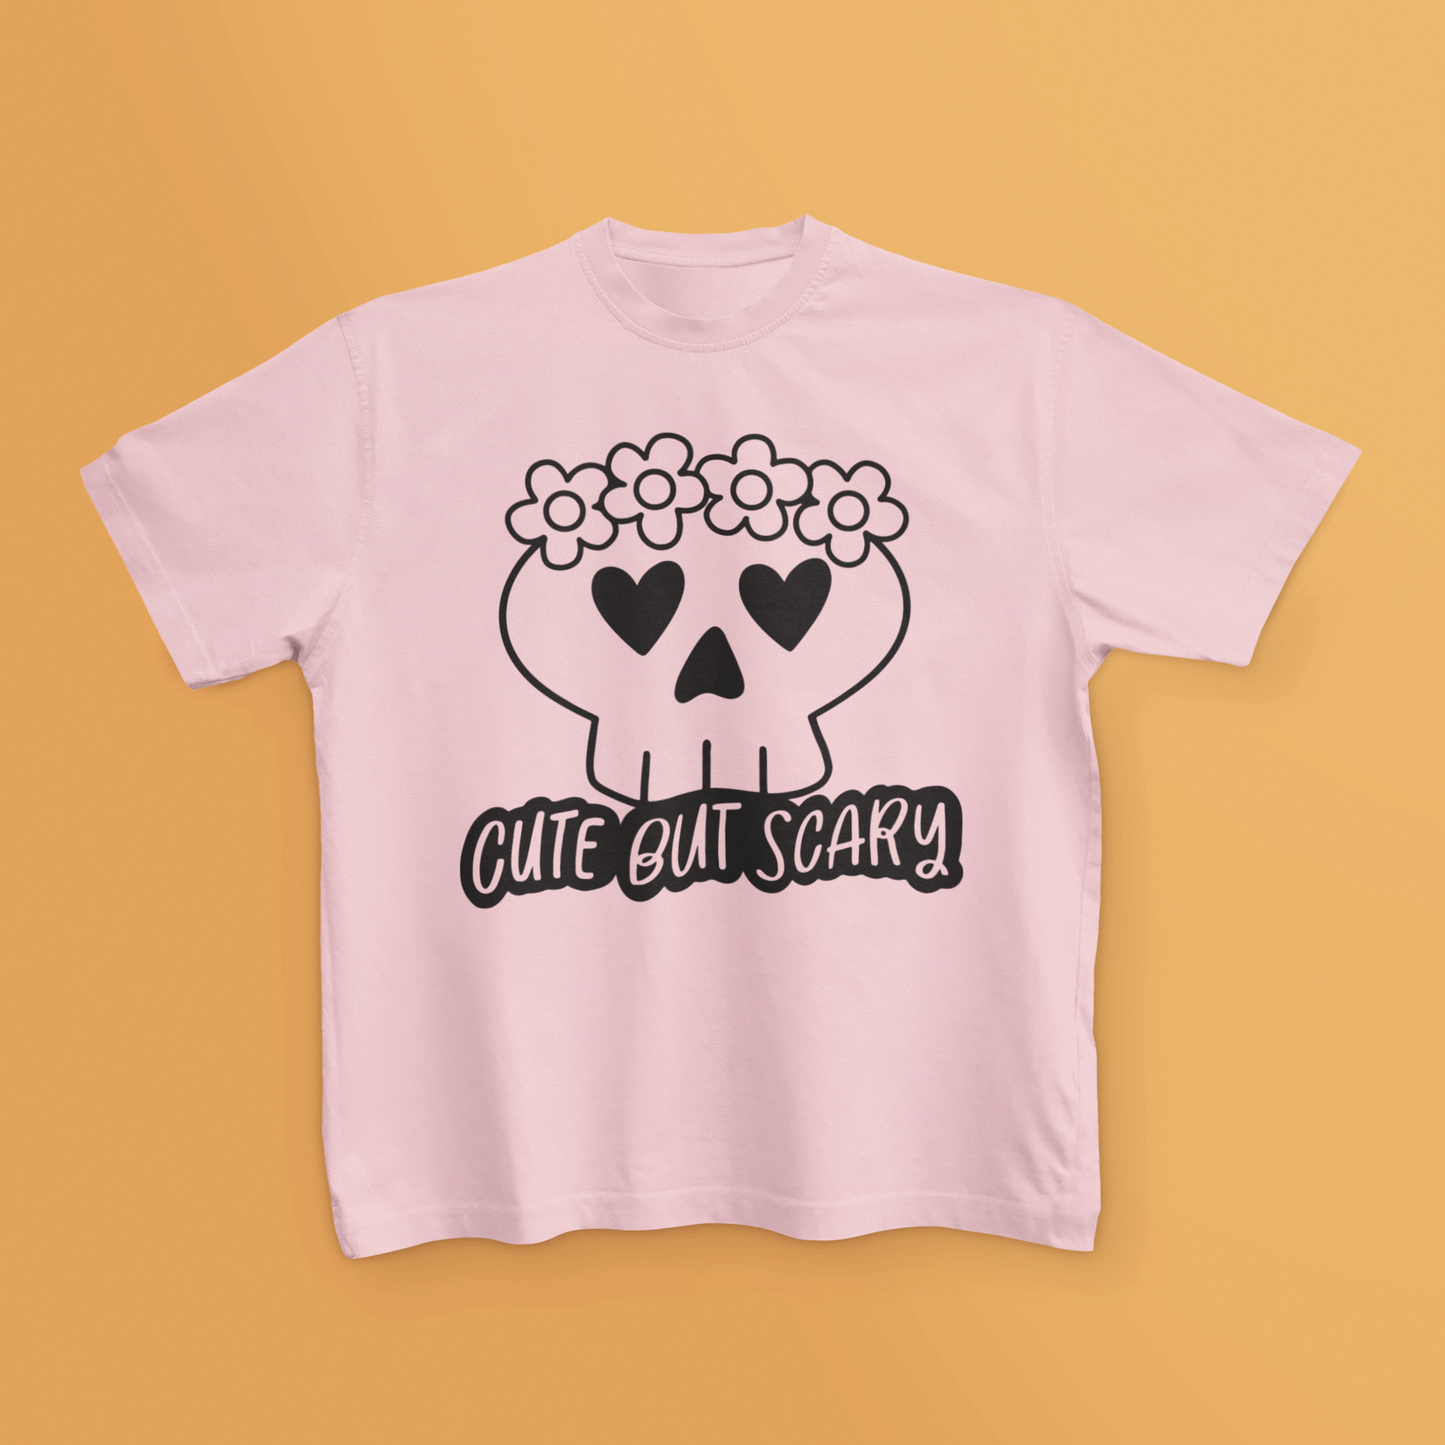 Cute but scary kids t-shirt design svg